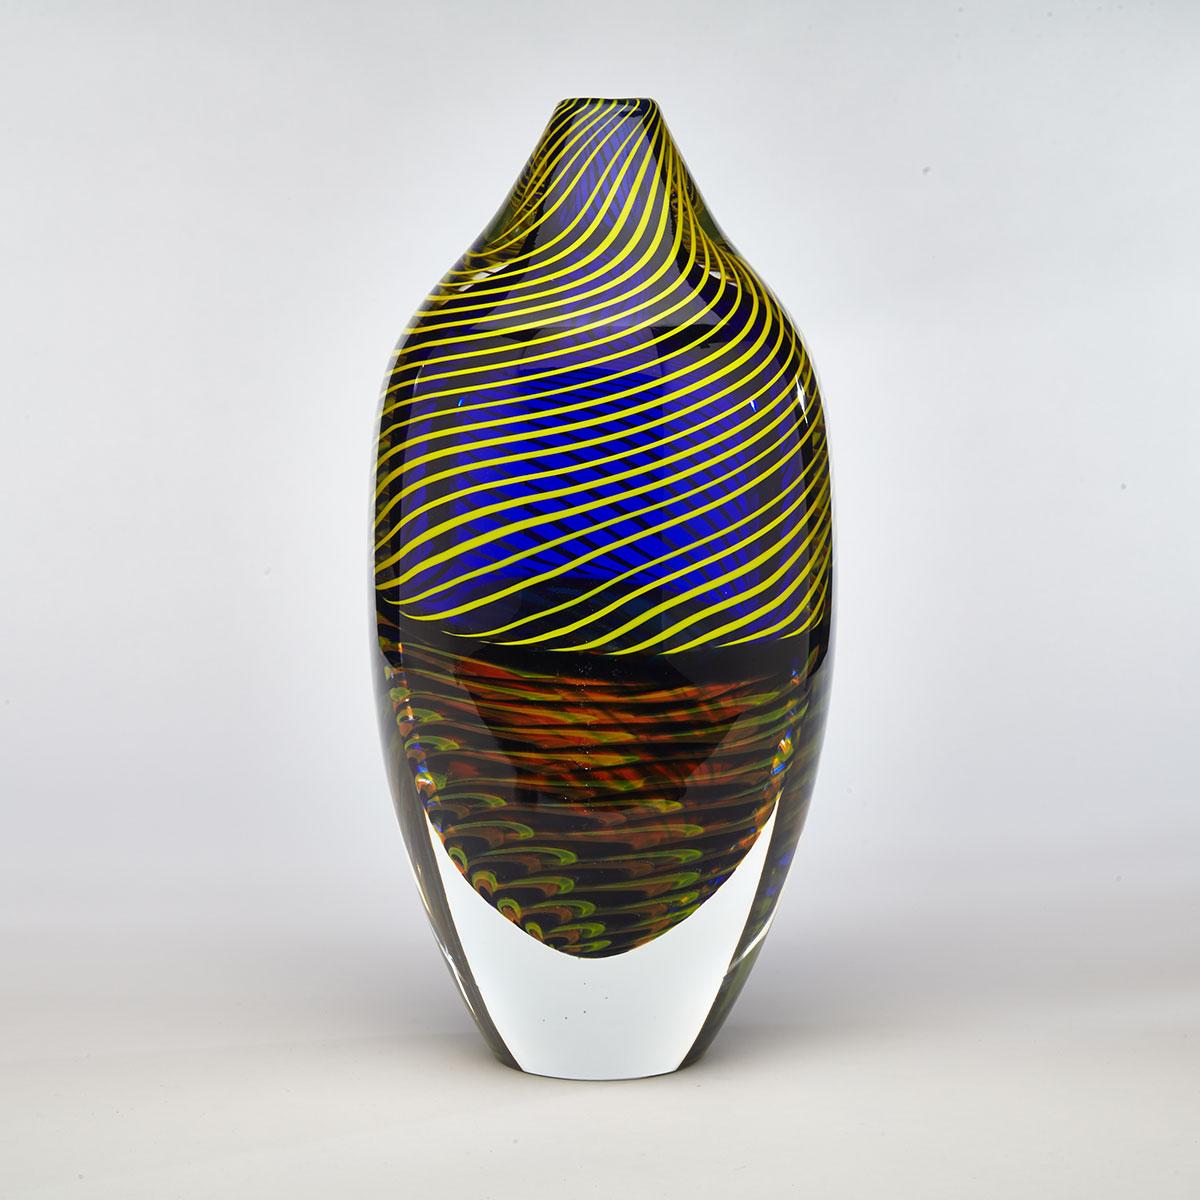 Romano Donà (Italian, b.1956), Incalmo Glass Vase, 1999